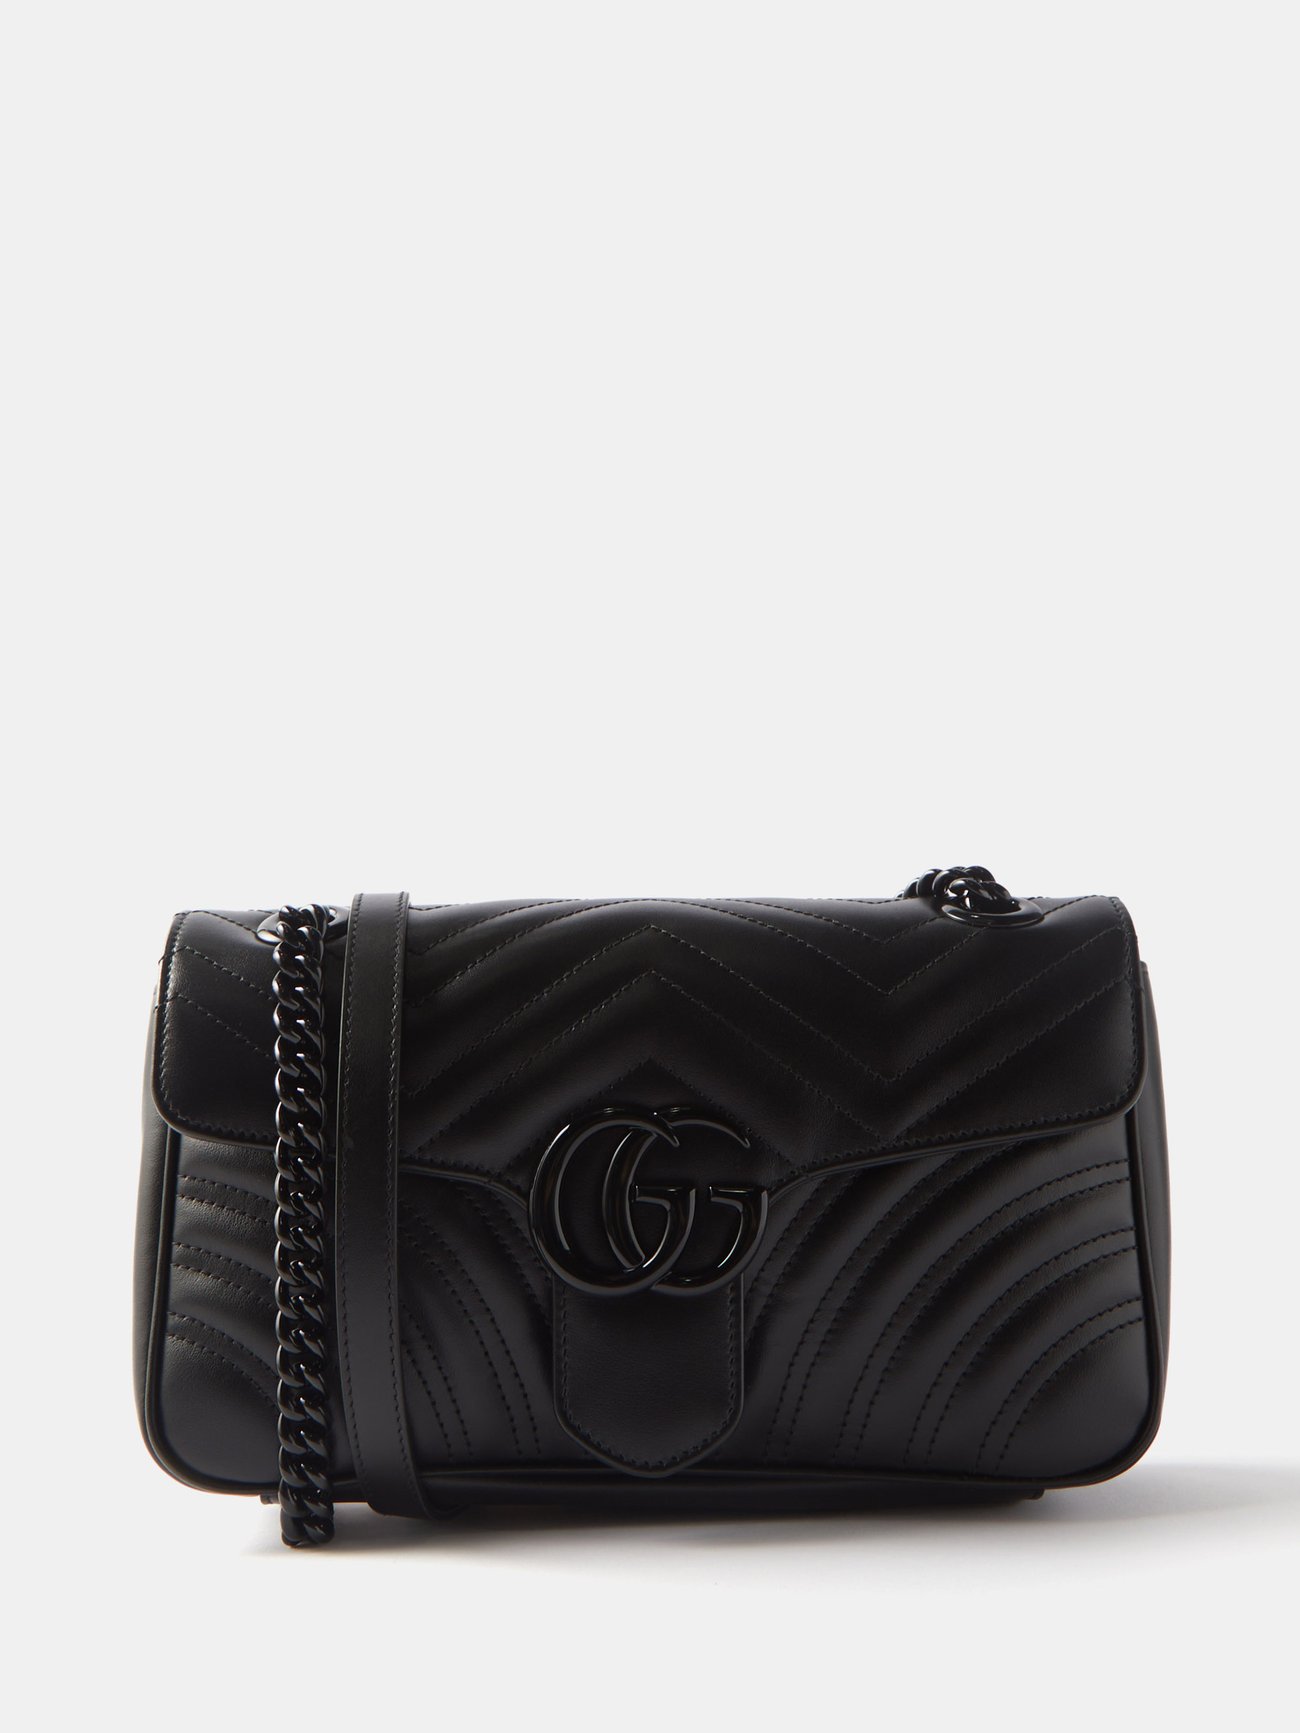 Gucci Leather Shoulder Strap - Black Bag Accessories, Accessories